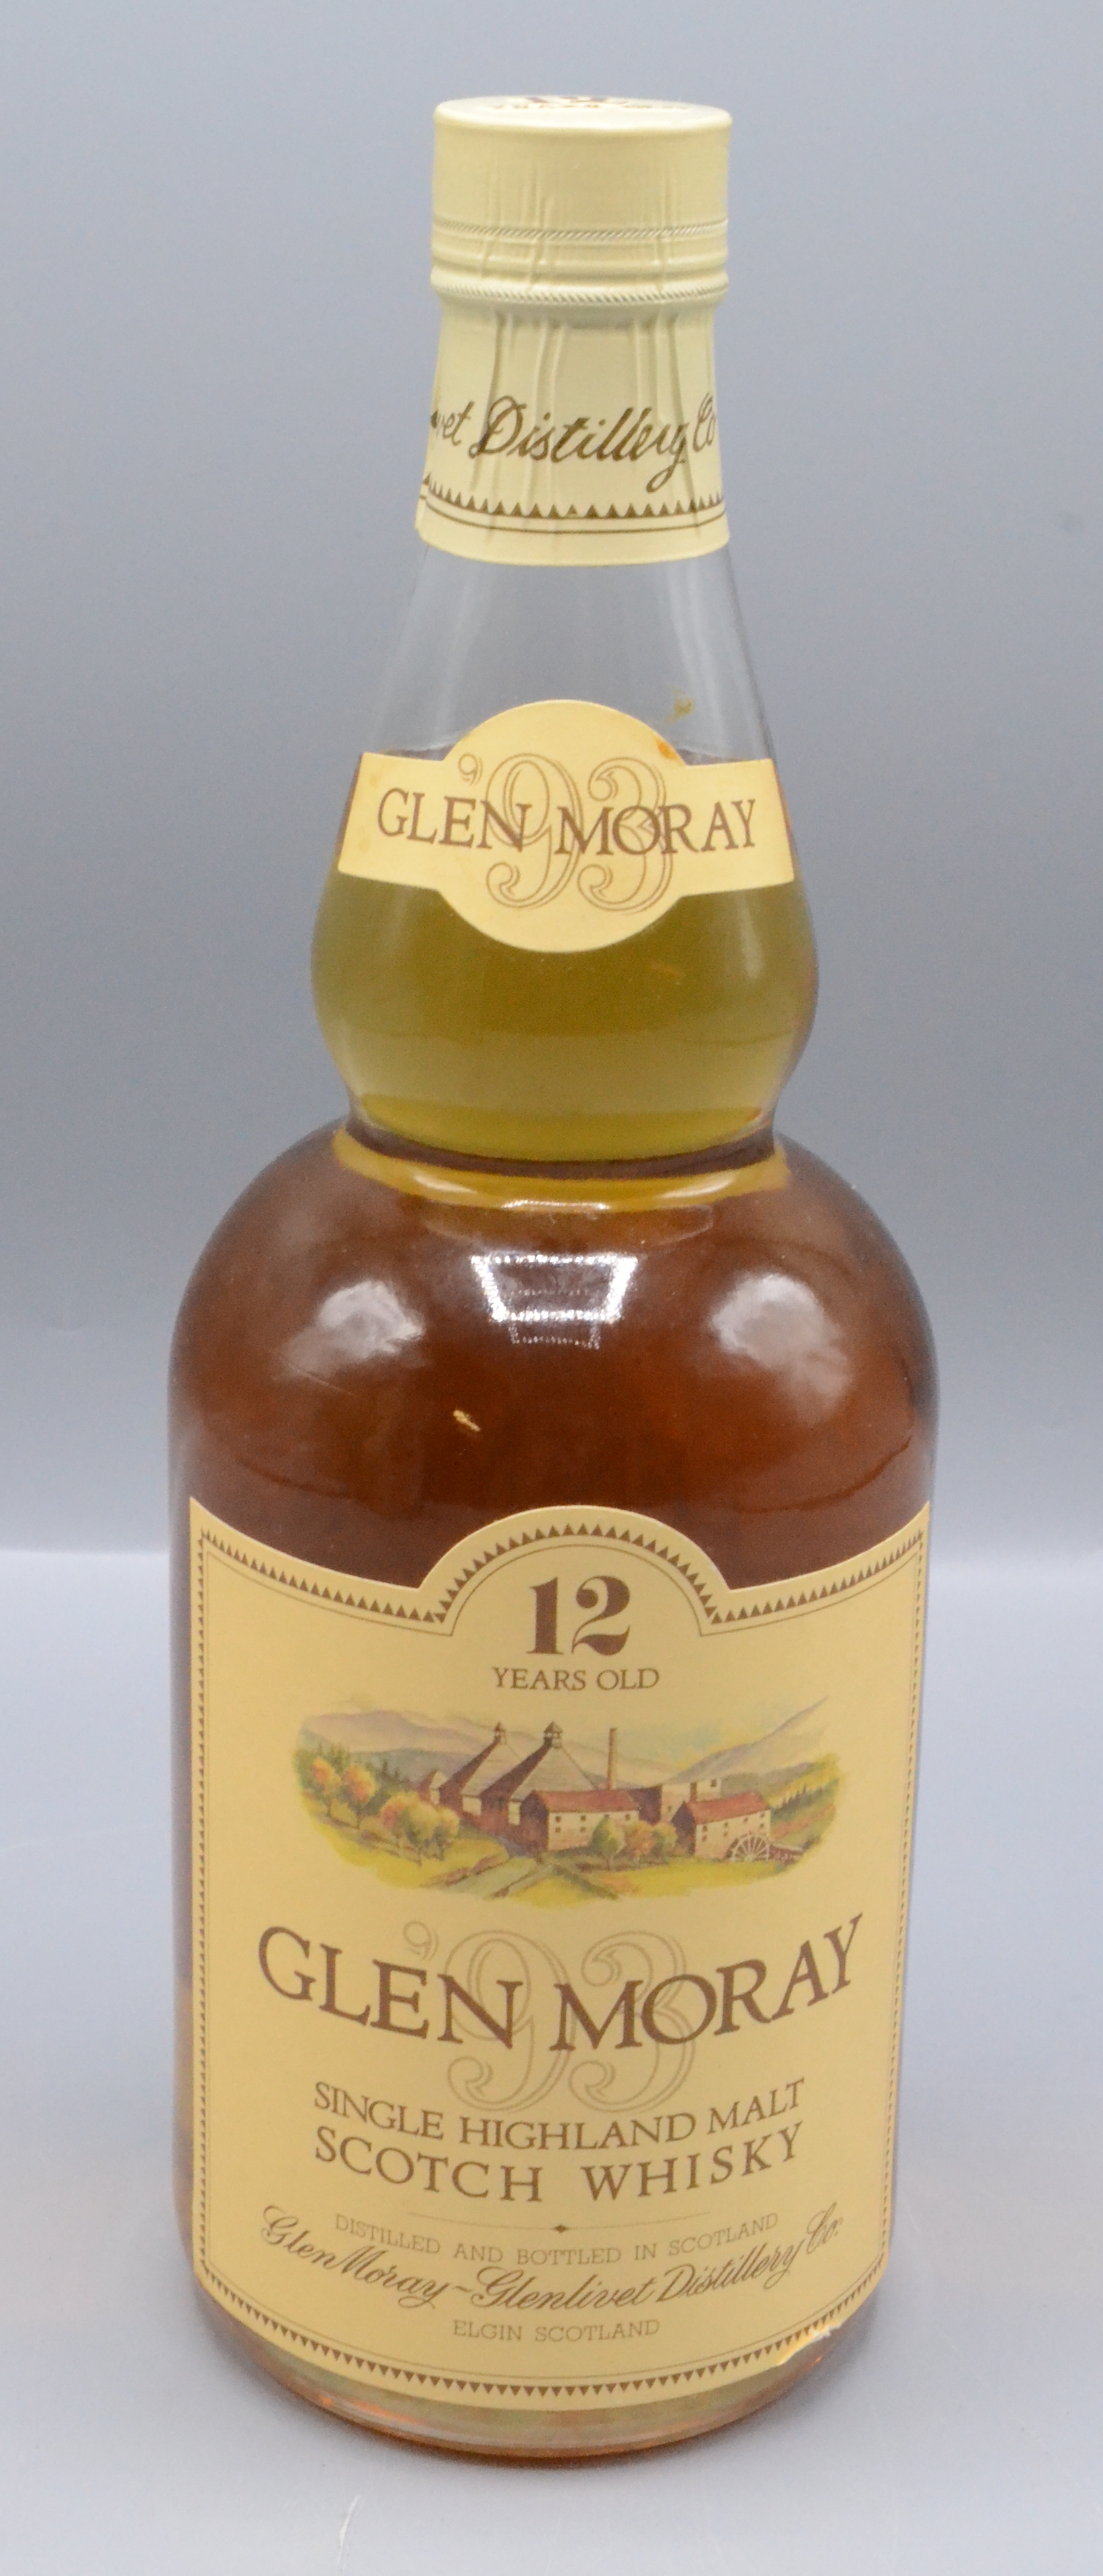 Glen Moray Single Highland Malt Scotch Whisky, 12 years old, - Image 3 of 3